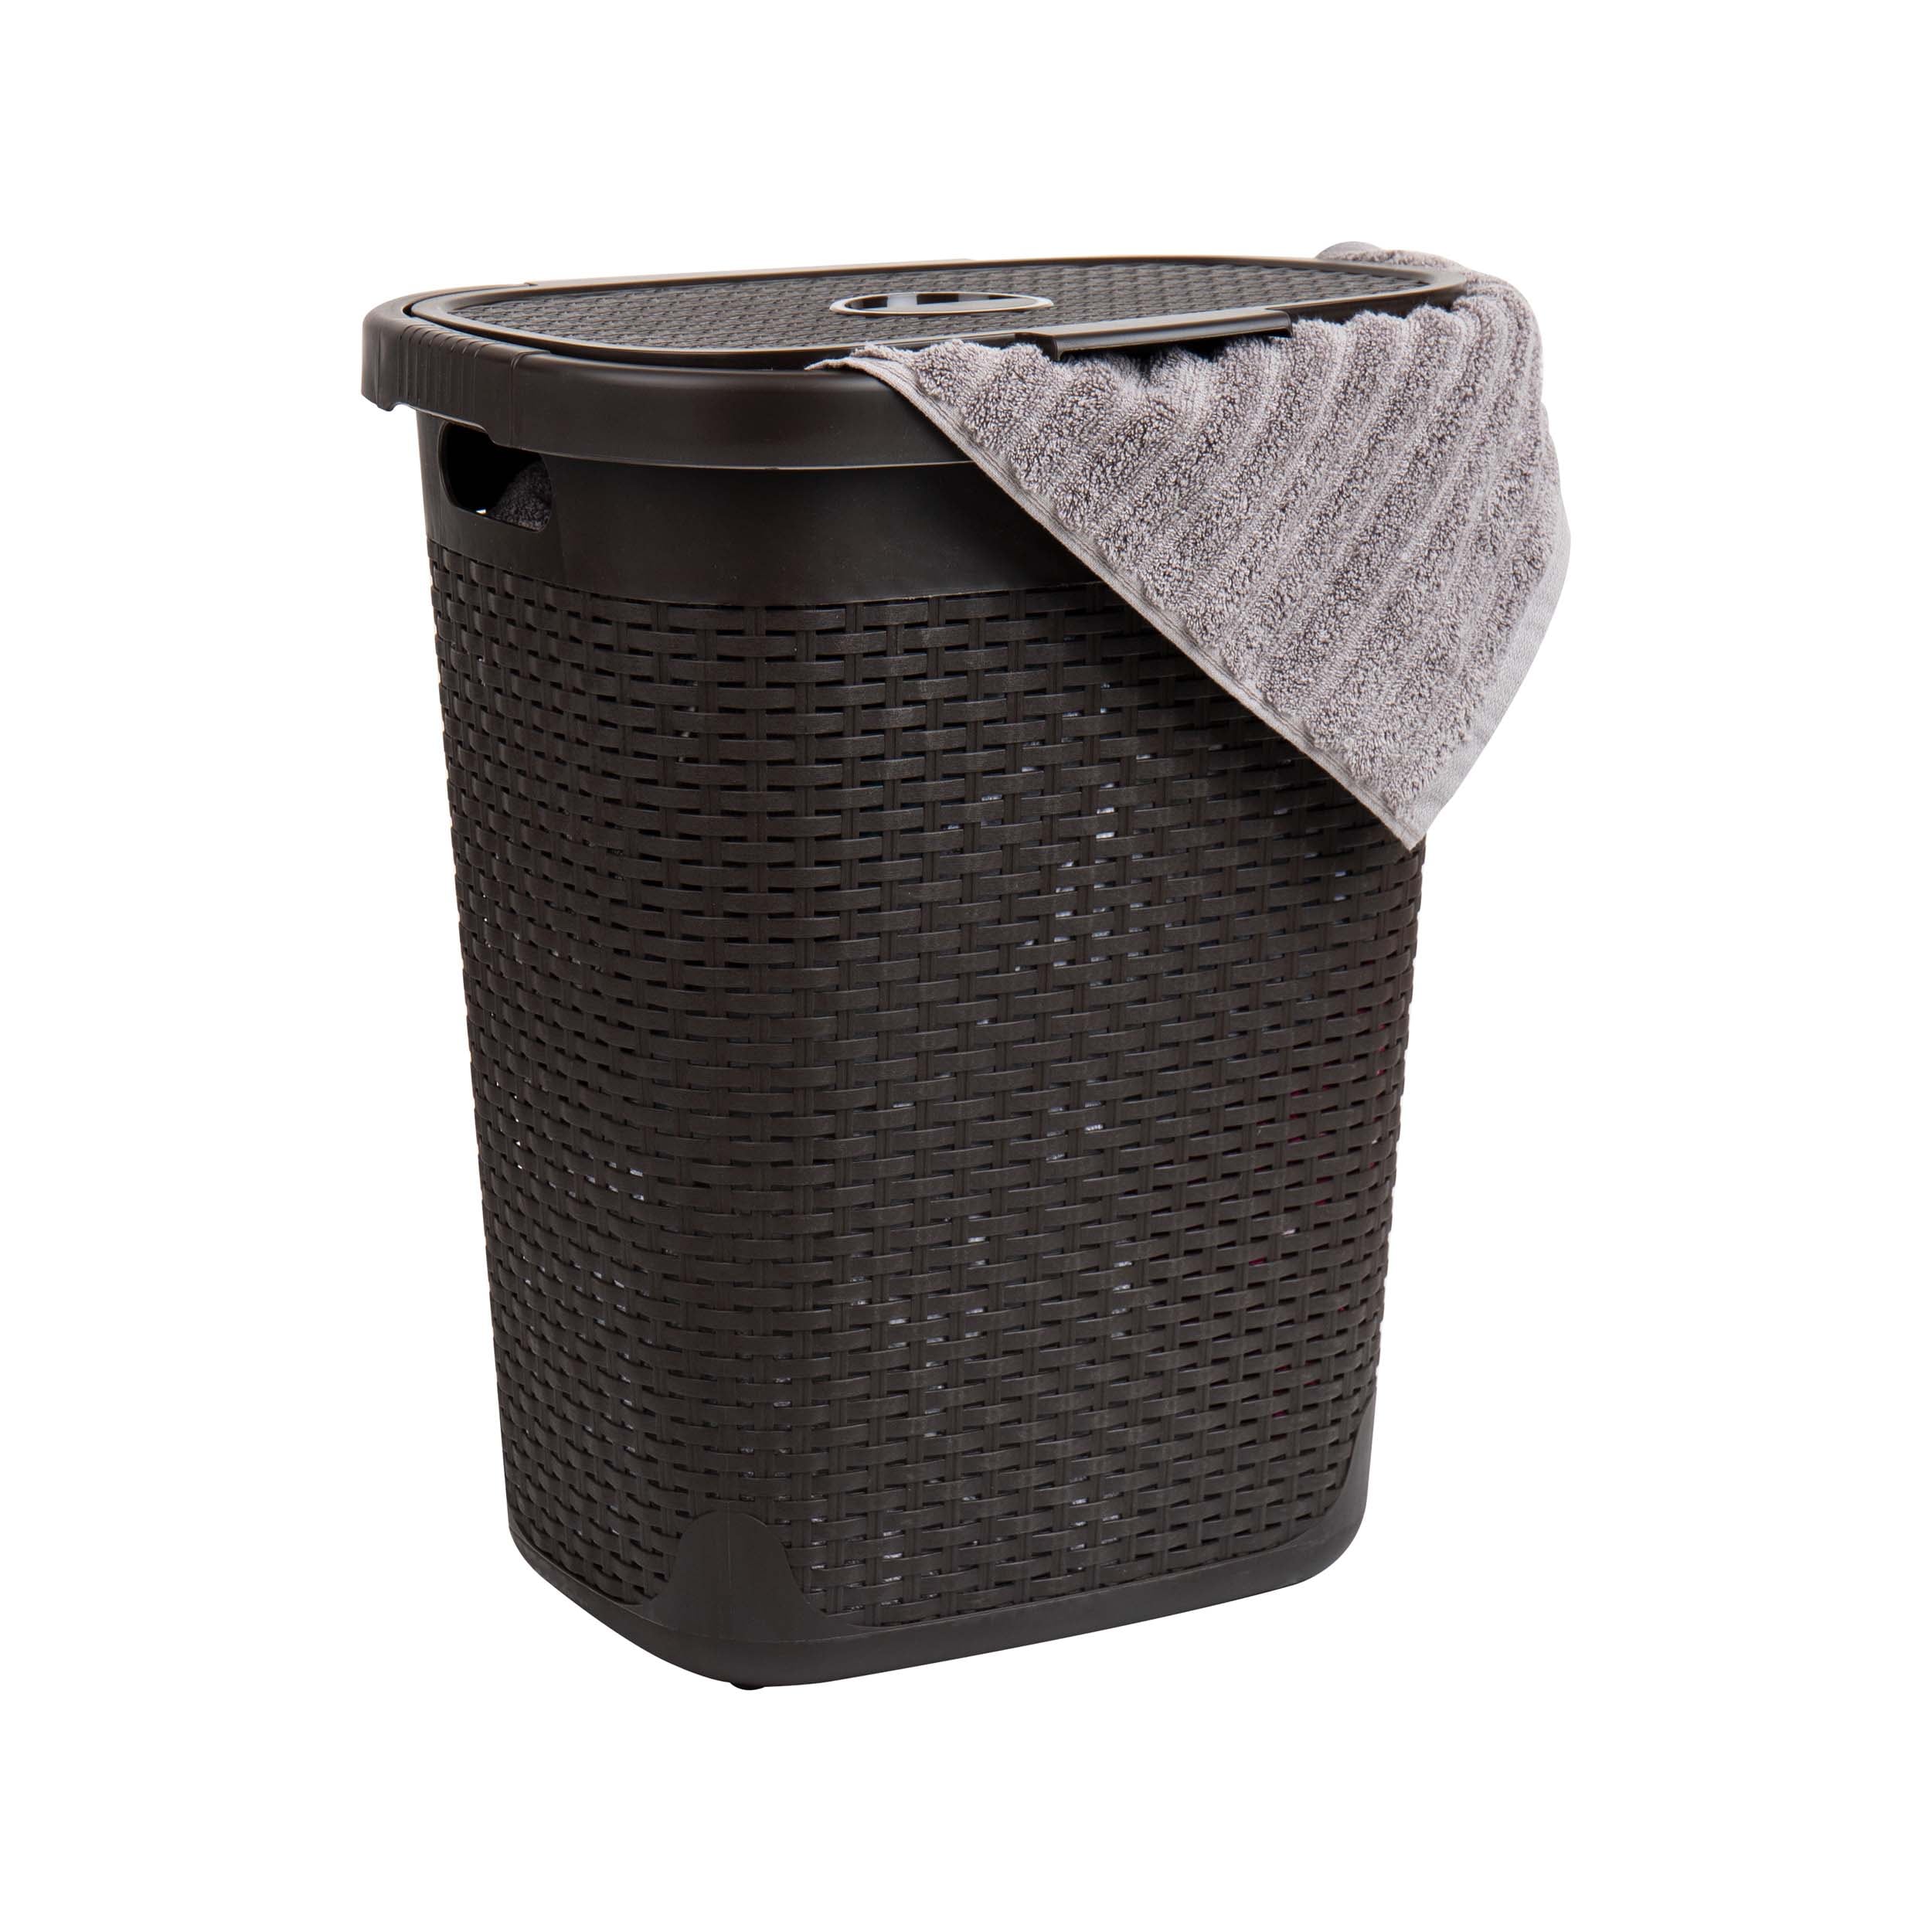 Laundry Basket (XL) in black & white / Laundry Hamper